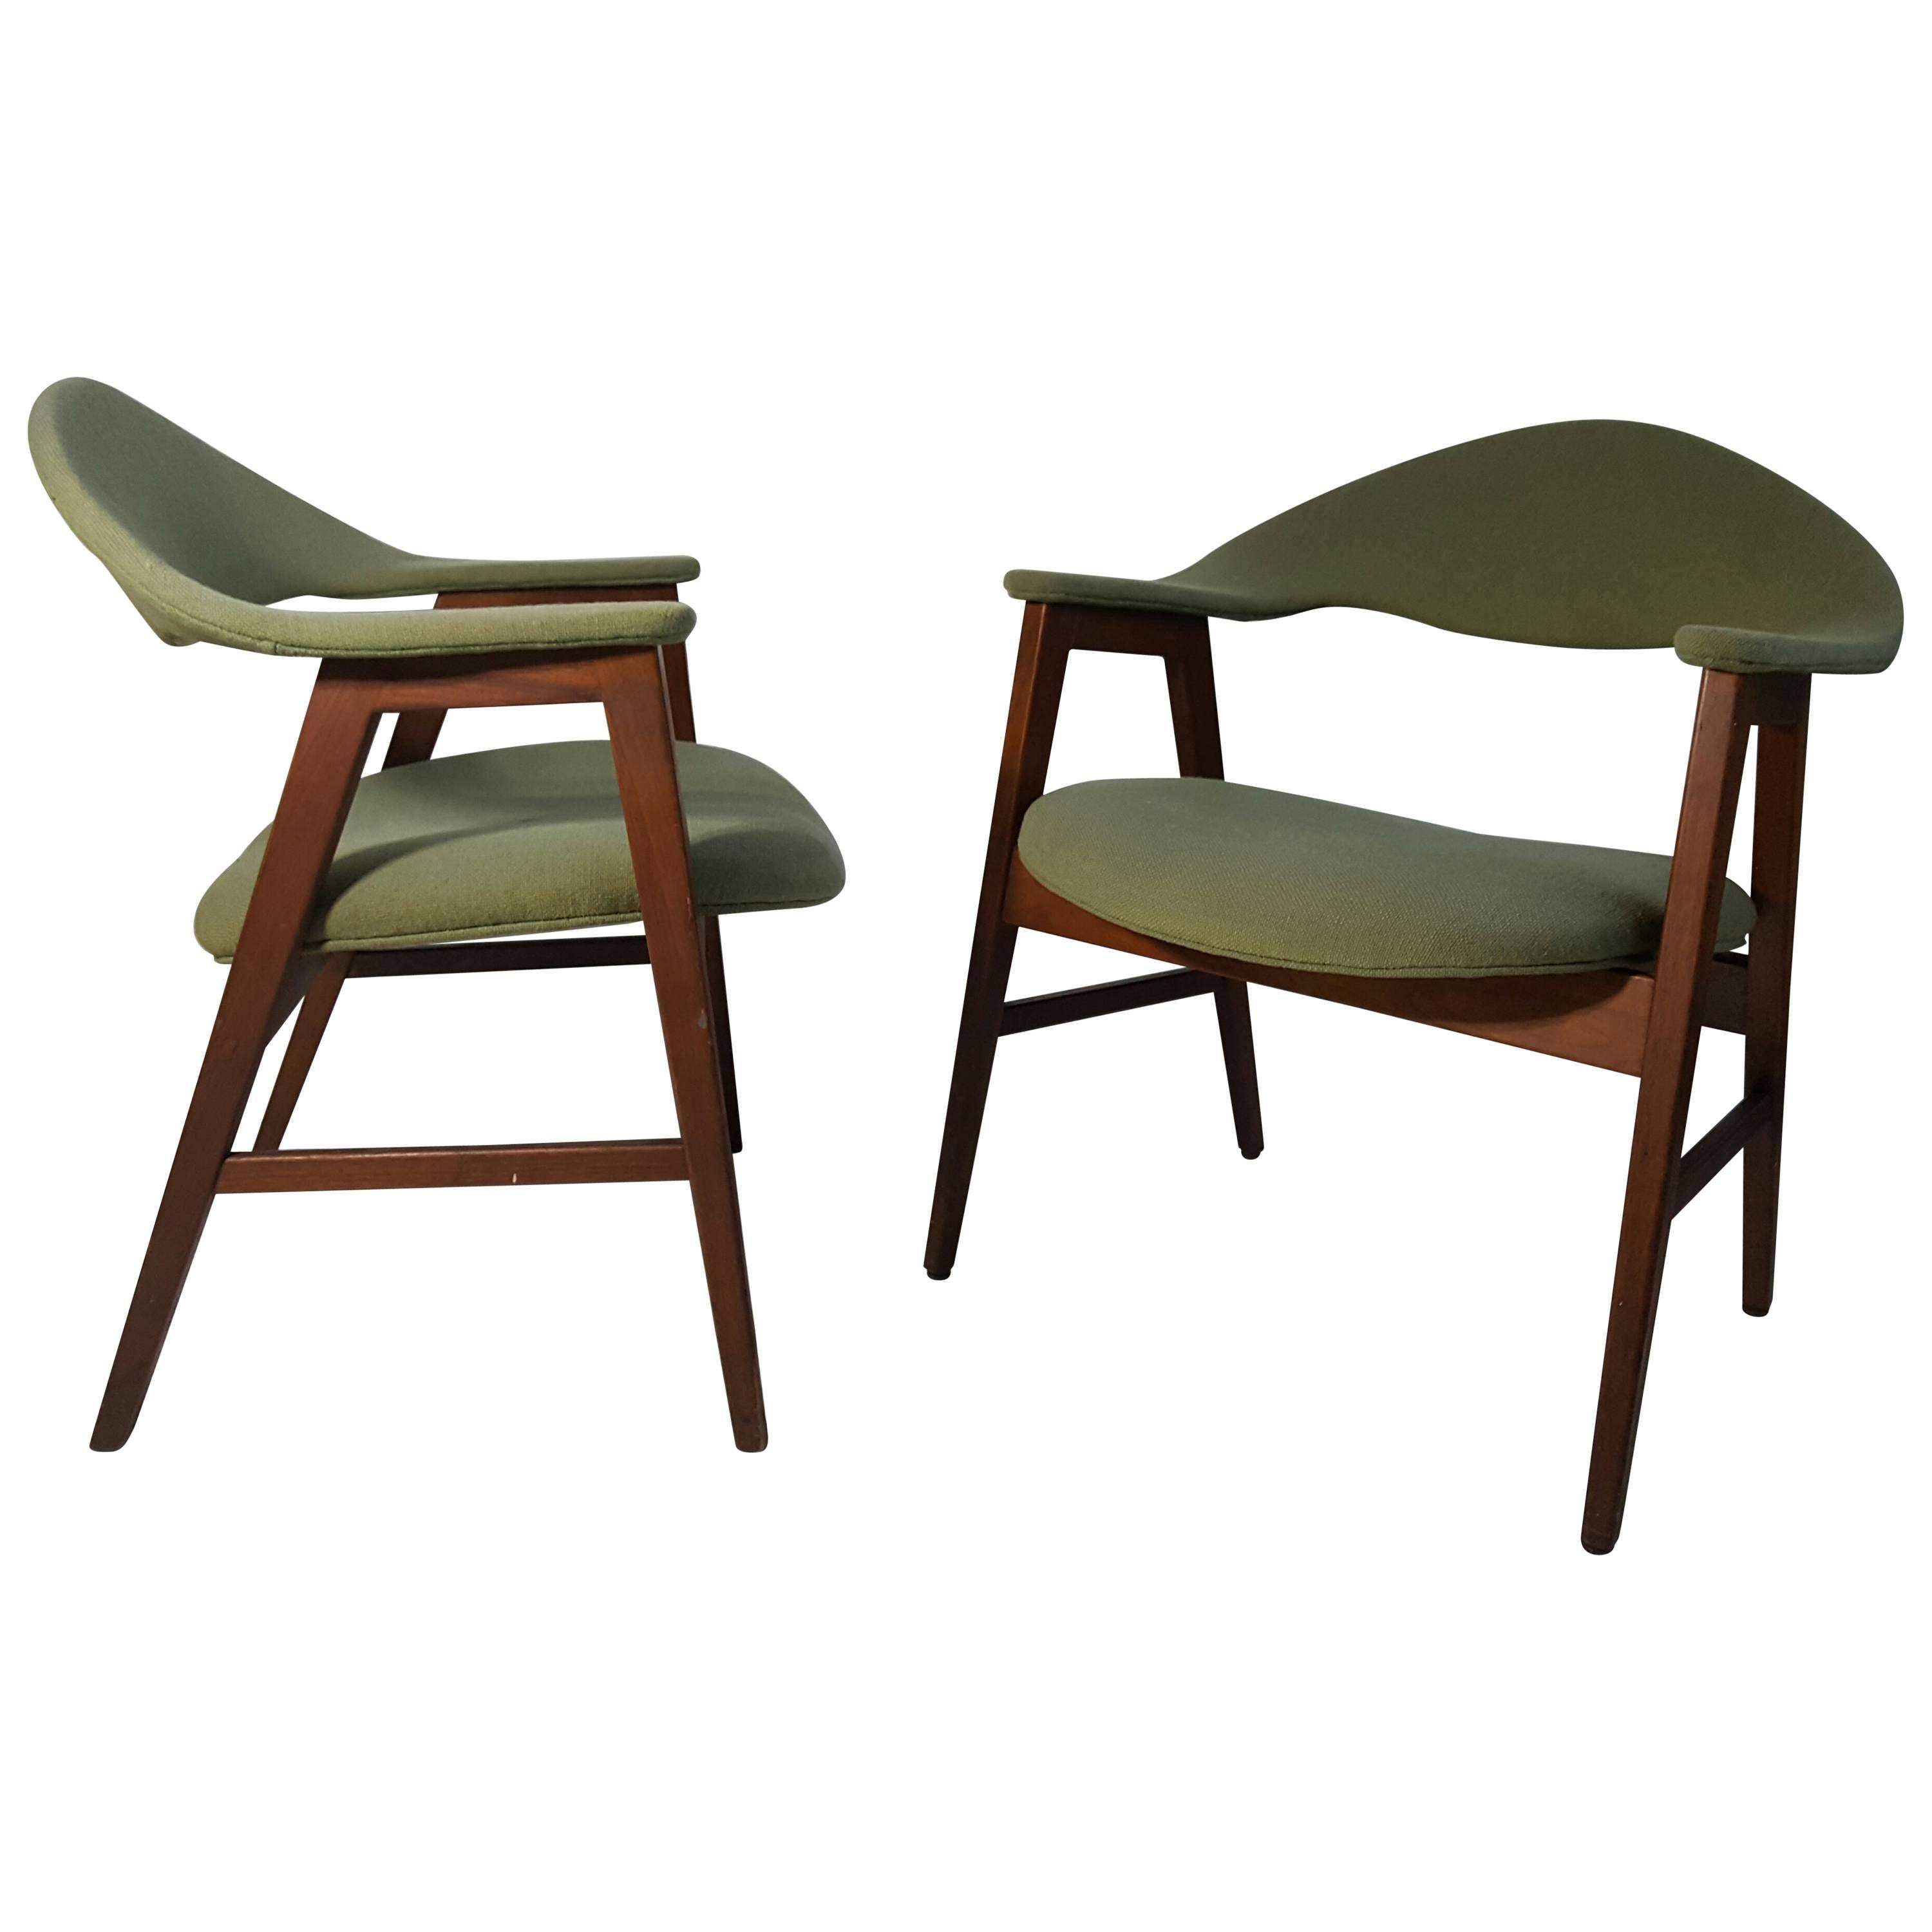 Pair of Danish Modern Lounge Chairs, Manner of Finn Juhl